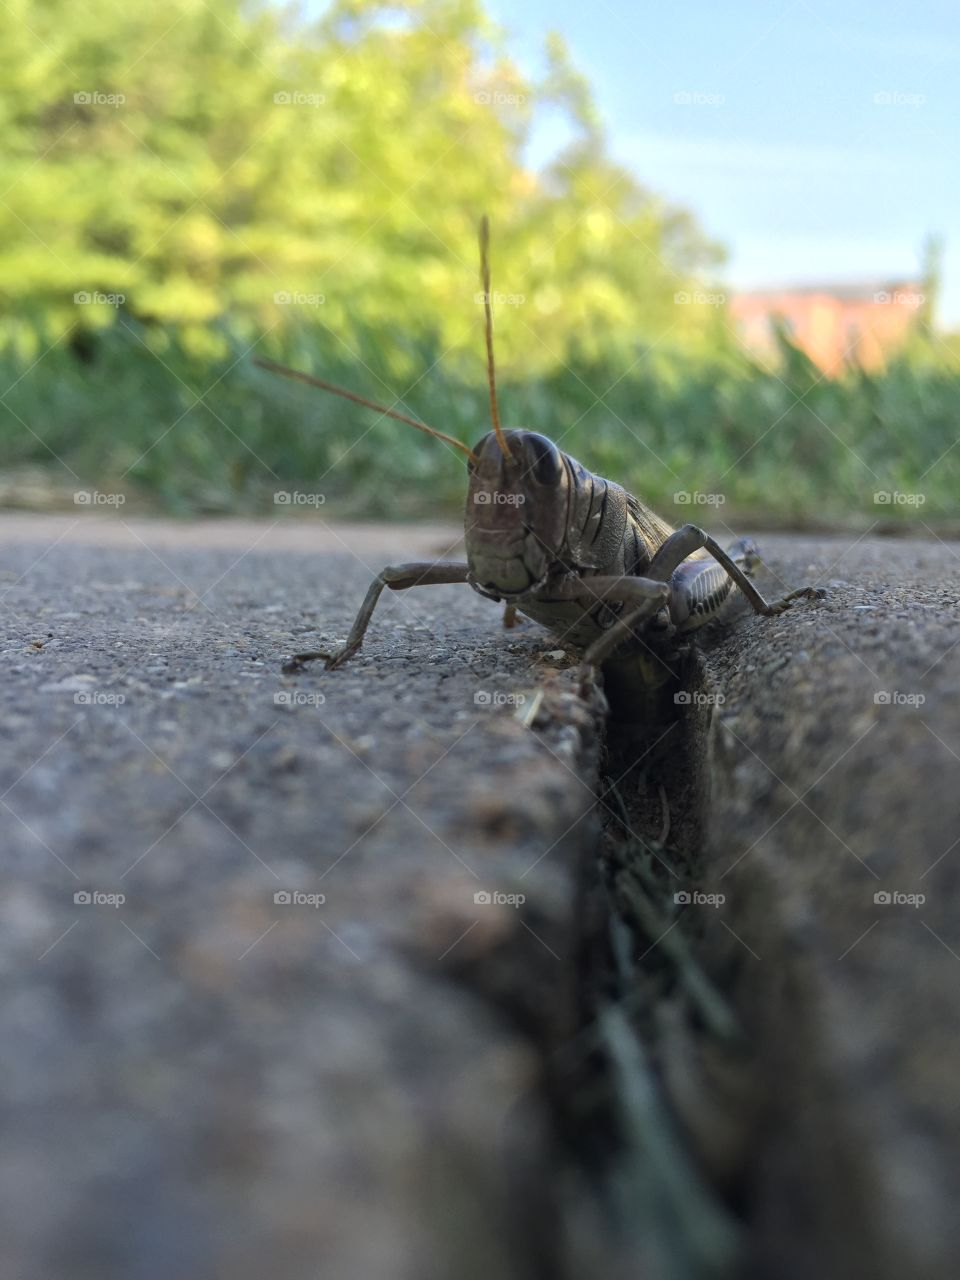 Grasshopper Dan